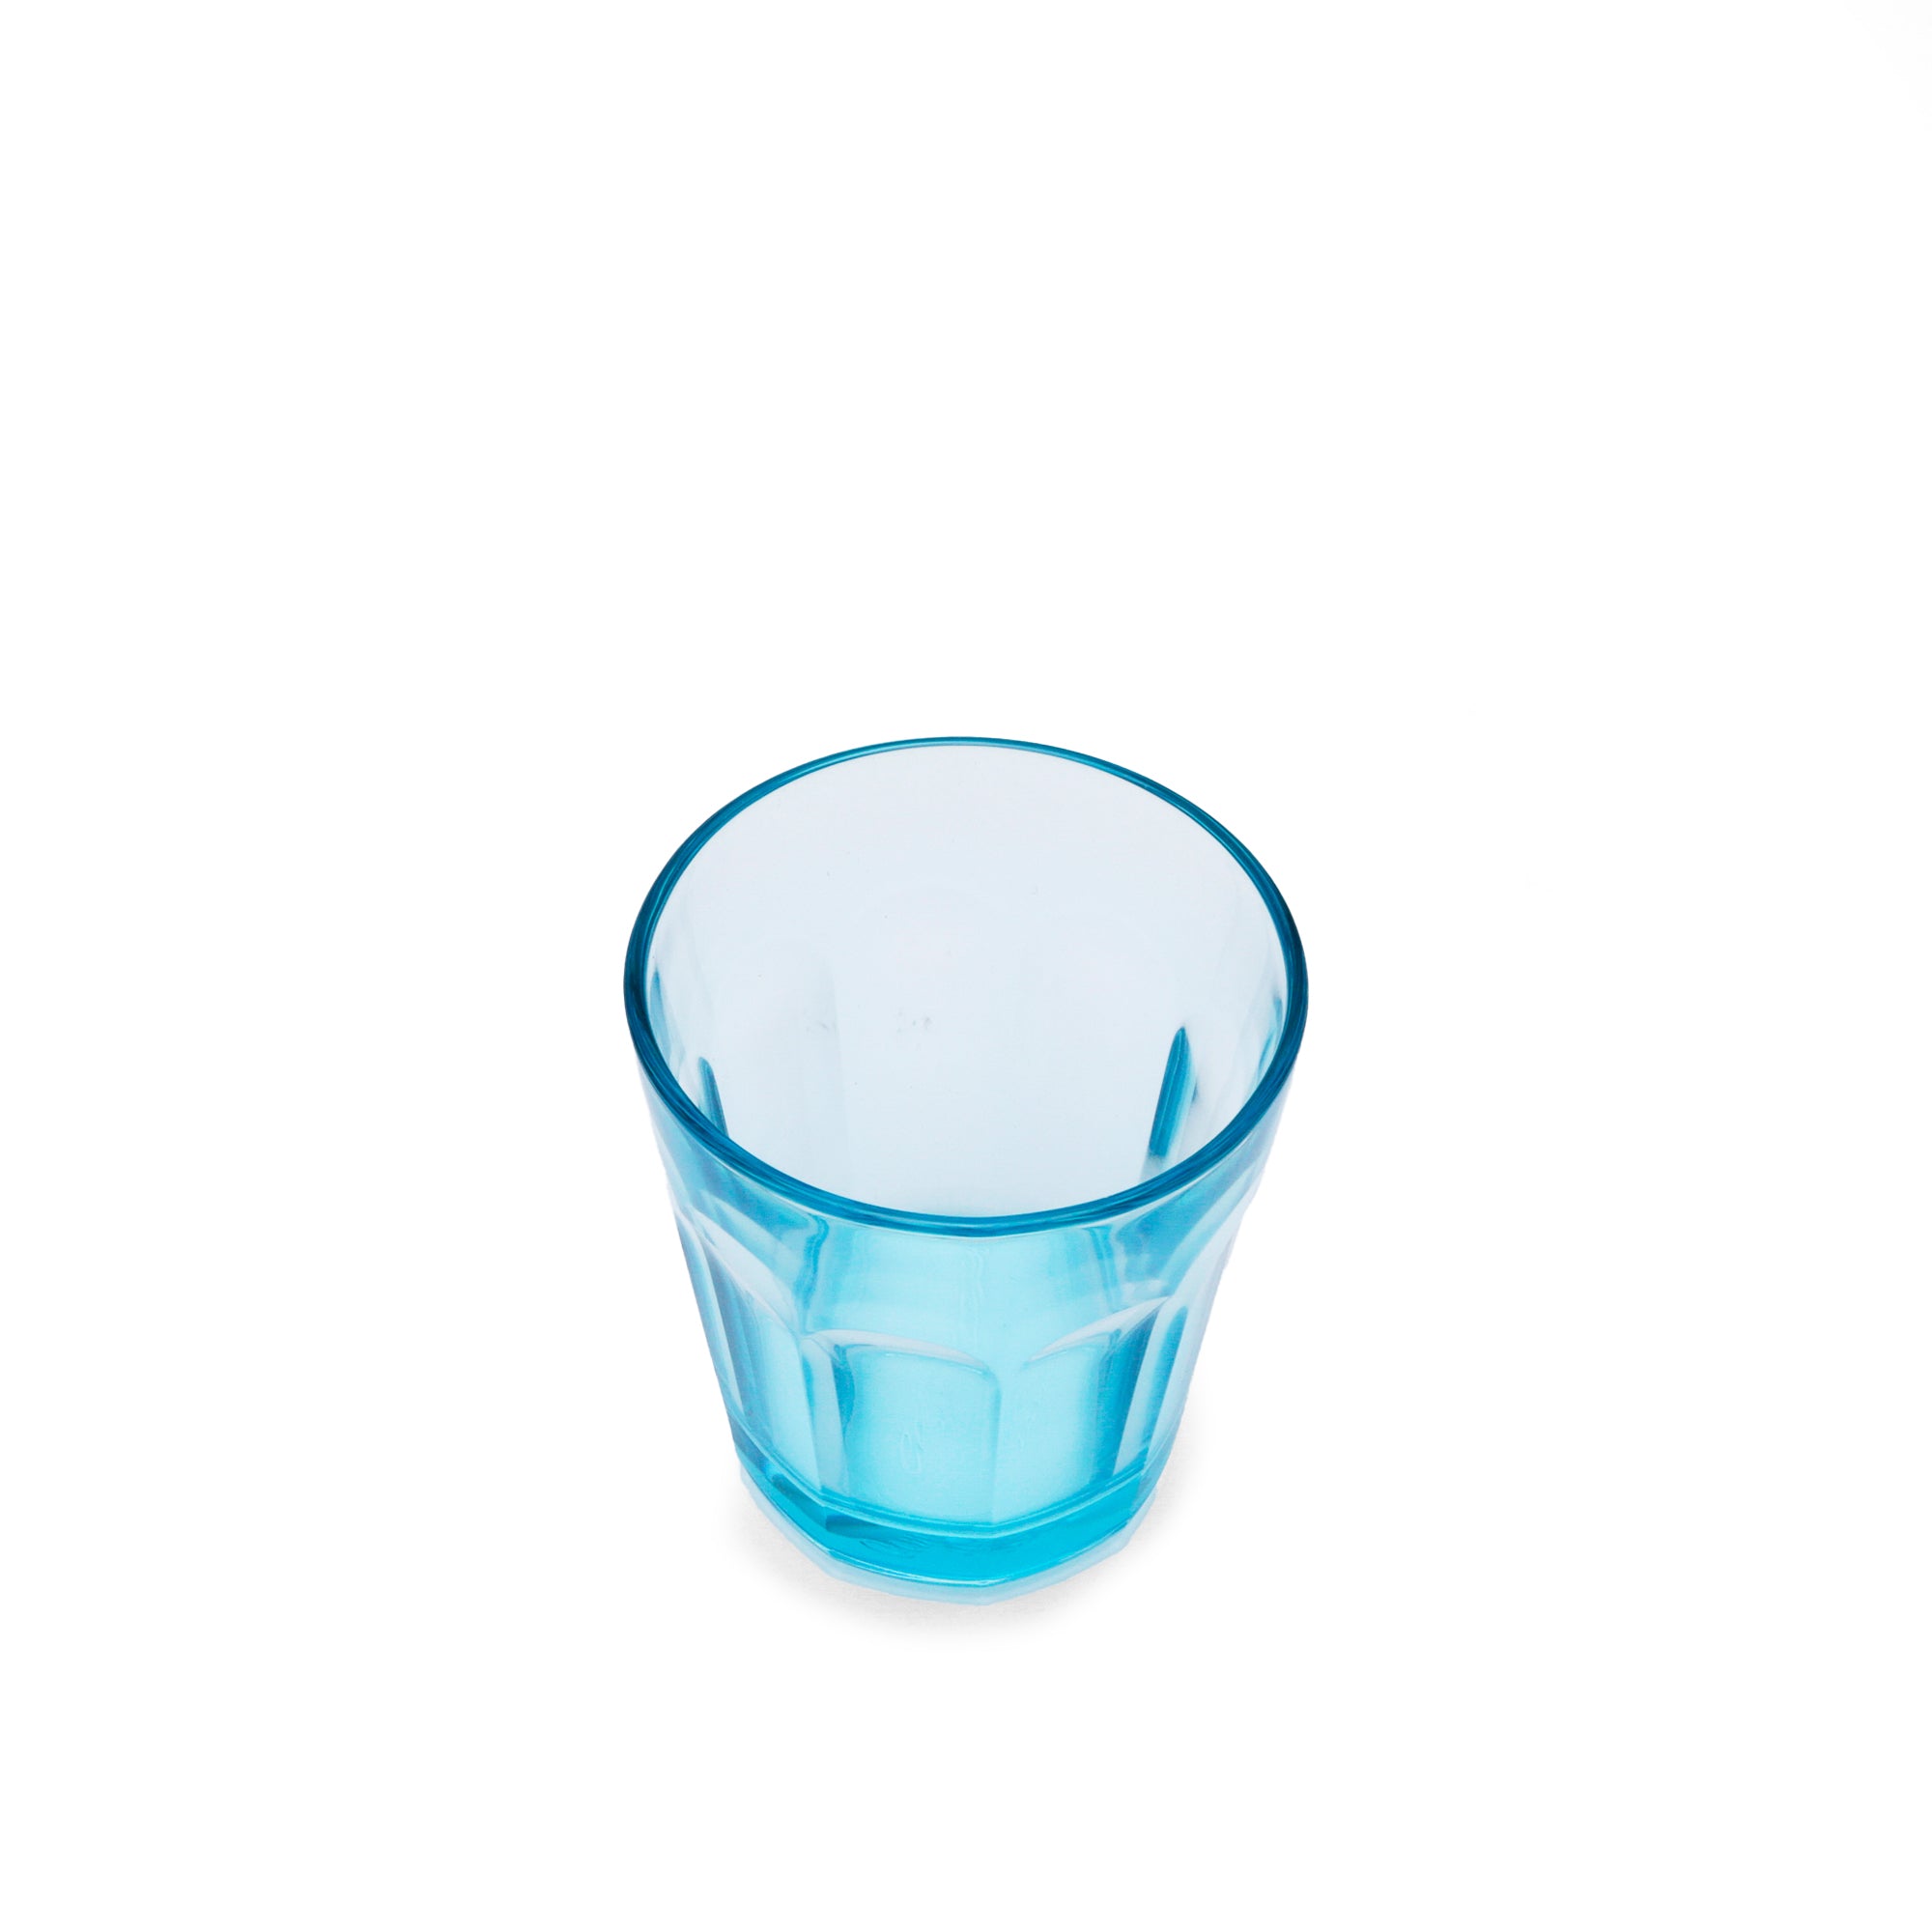 Blue Glass Tumbler, 6 fl. oz.